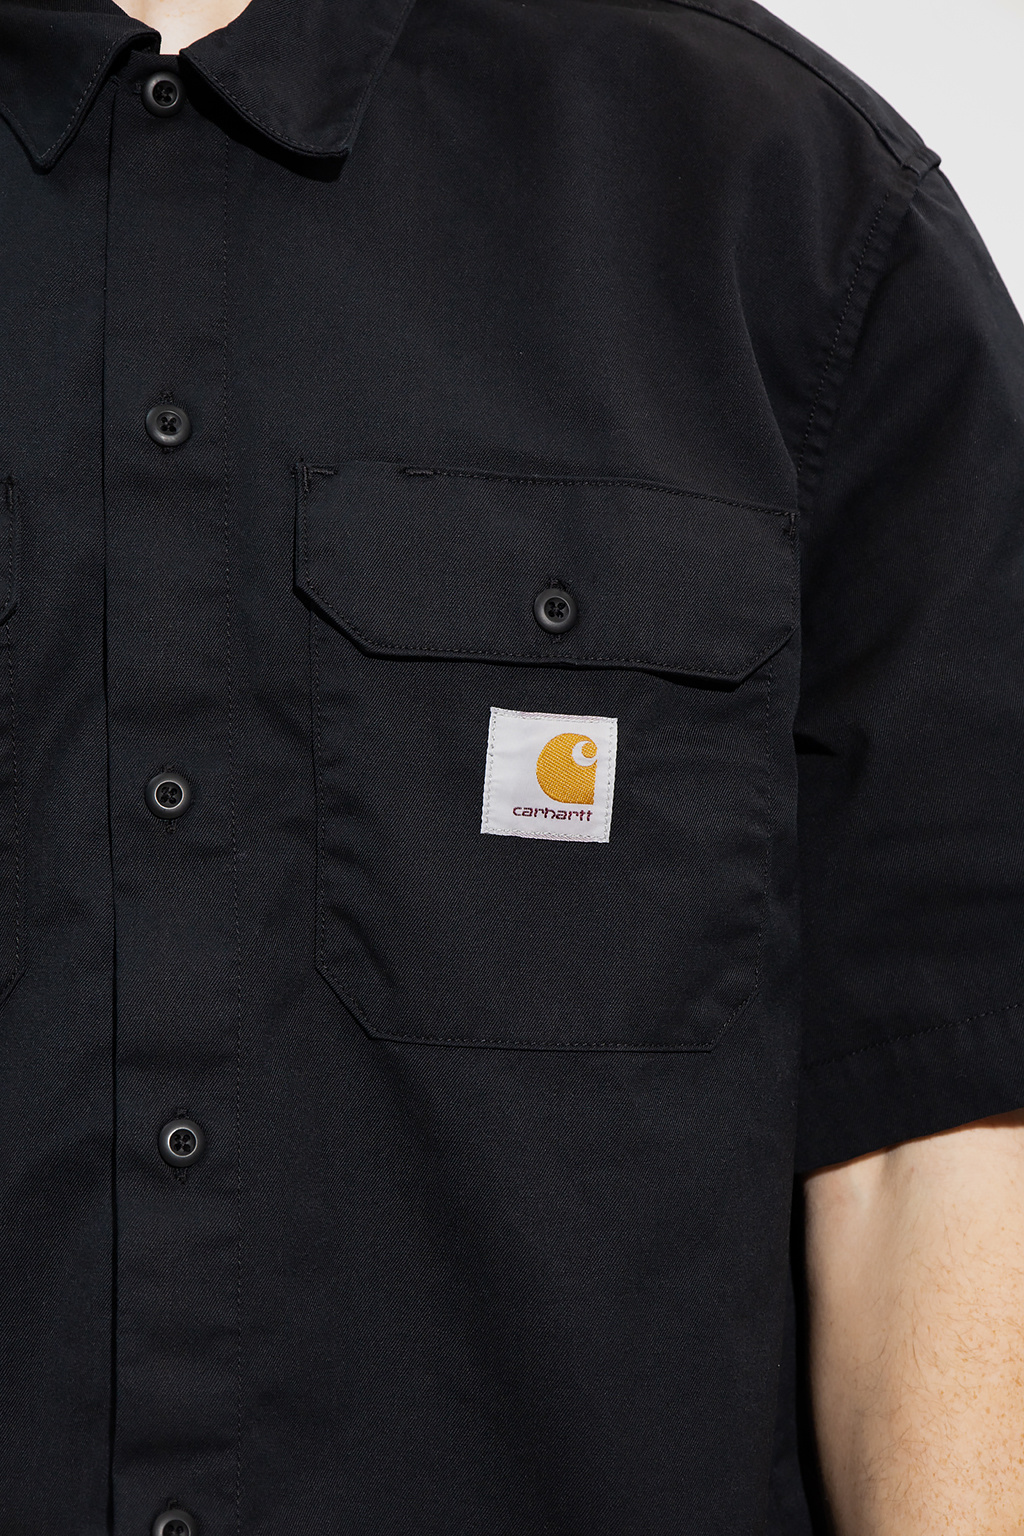 Carhartt WIP 'S/S Craft' short-sleeved shirt, Men's Clothing